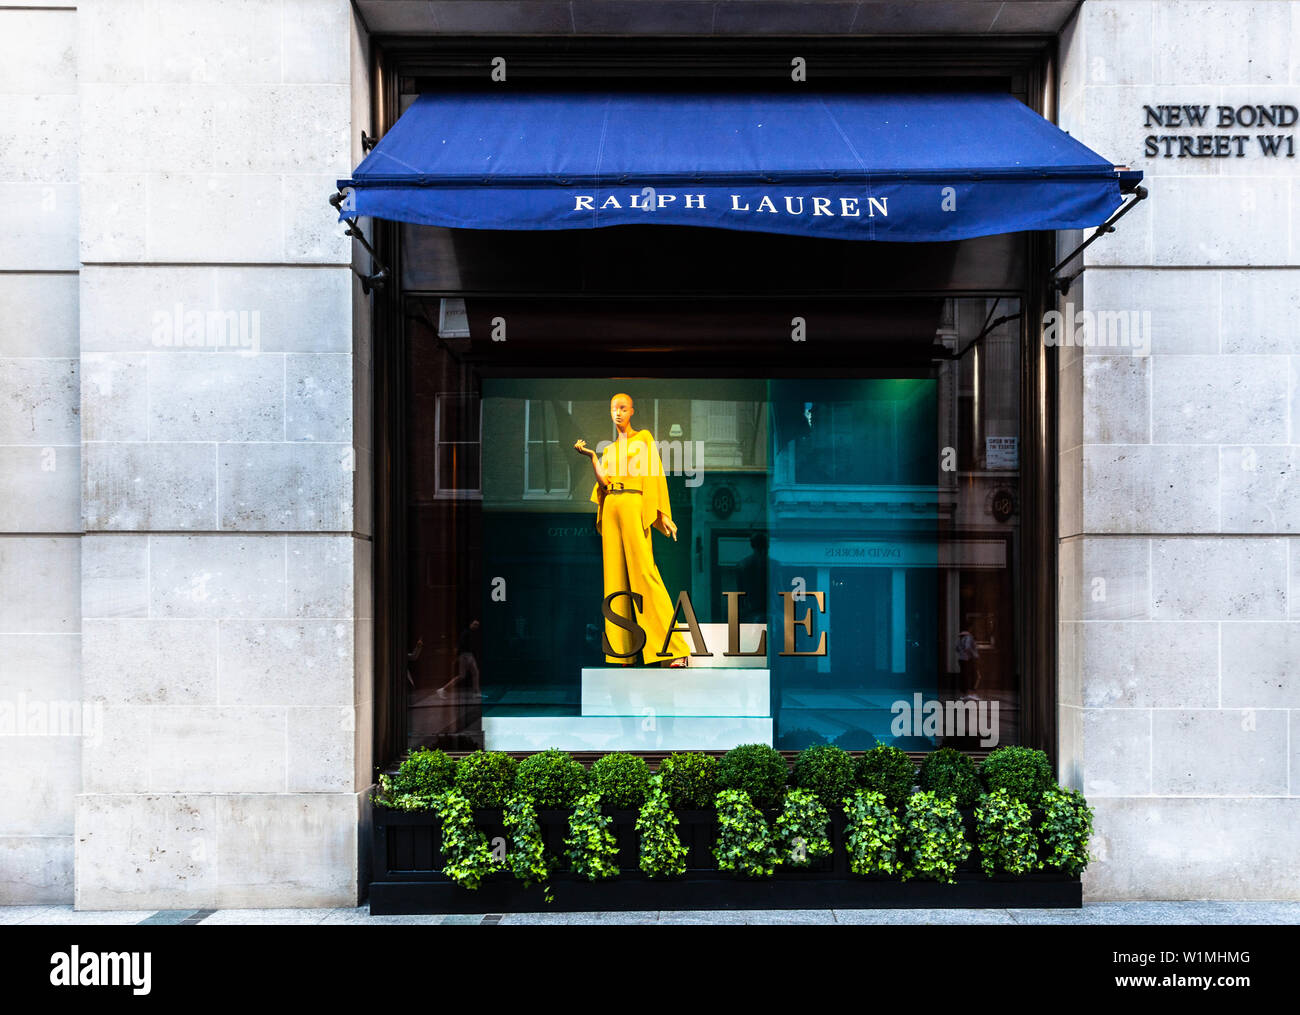 A Ralph Lauren window shop with awning, 1 New Bond St, Mayfair, London W1S 3LU, England, UK. Stock Photo